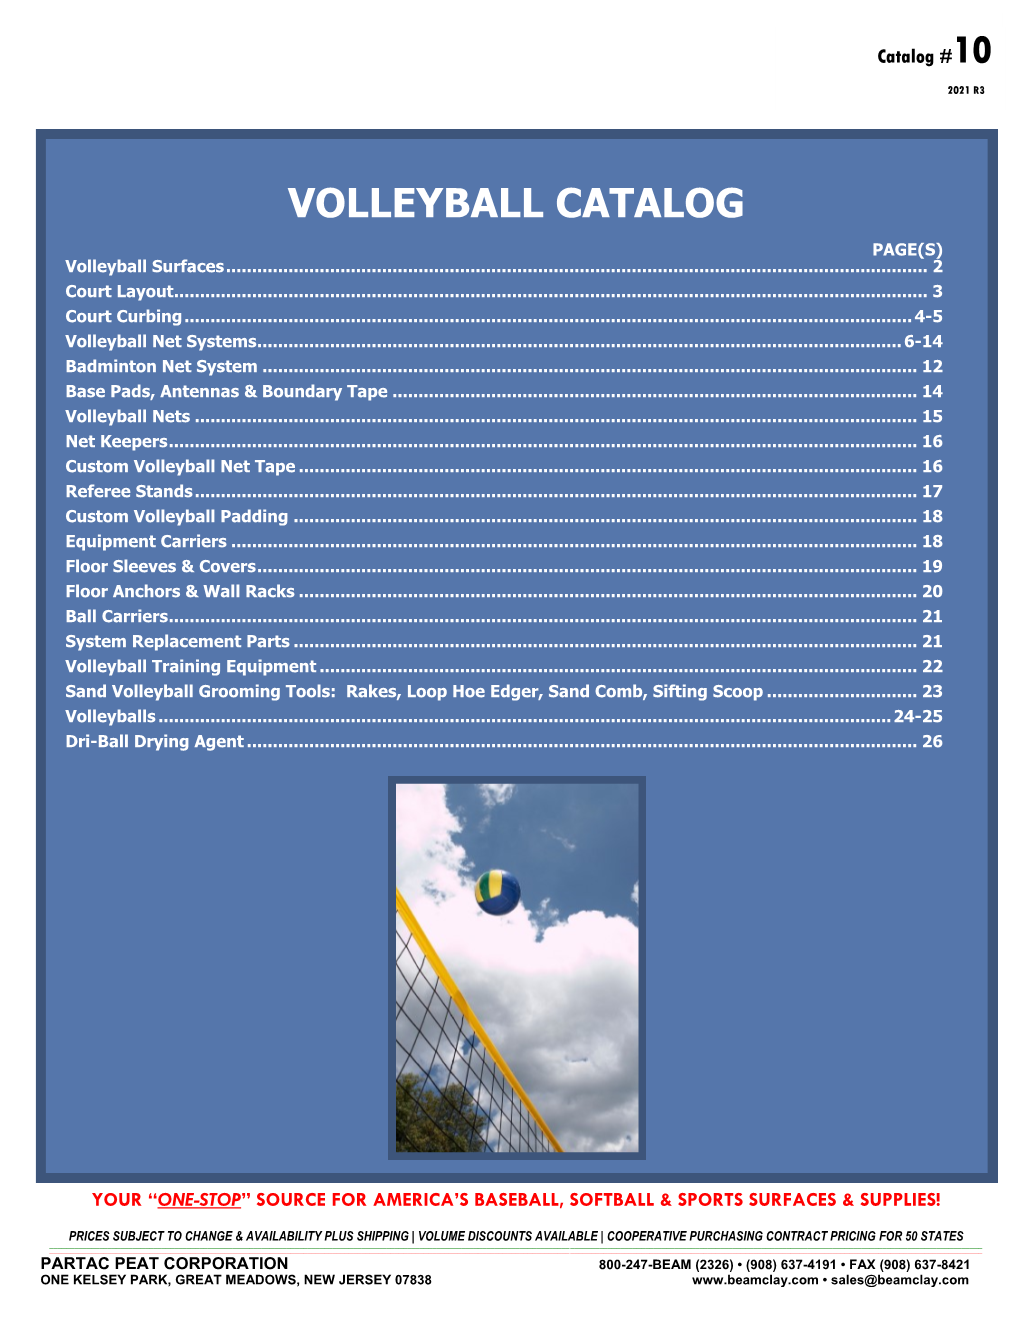 Volleyball Surfacing, Equipment & Supplies